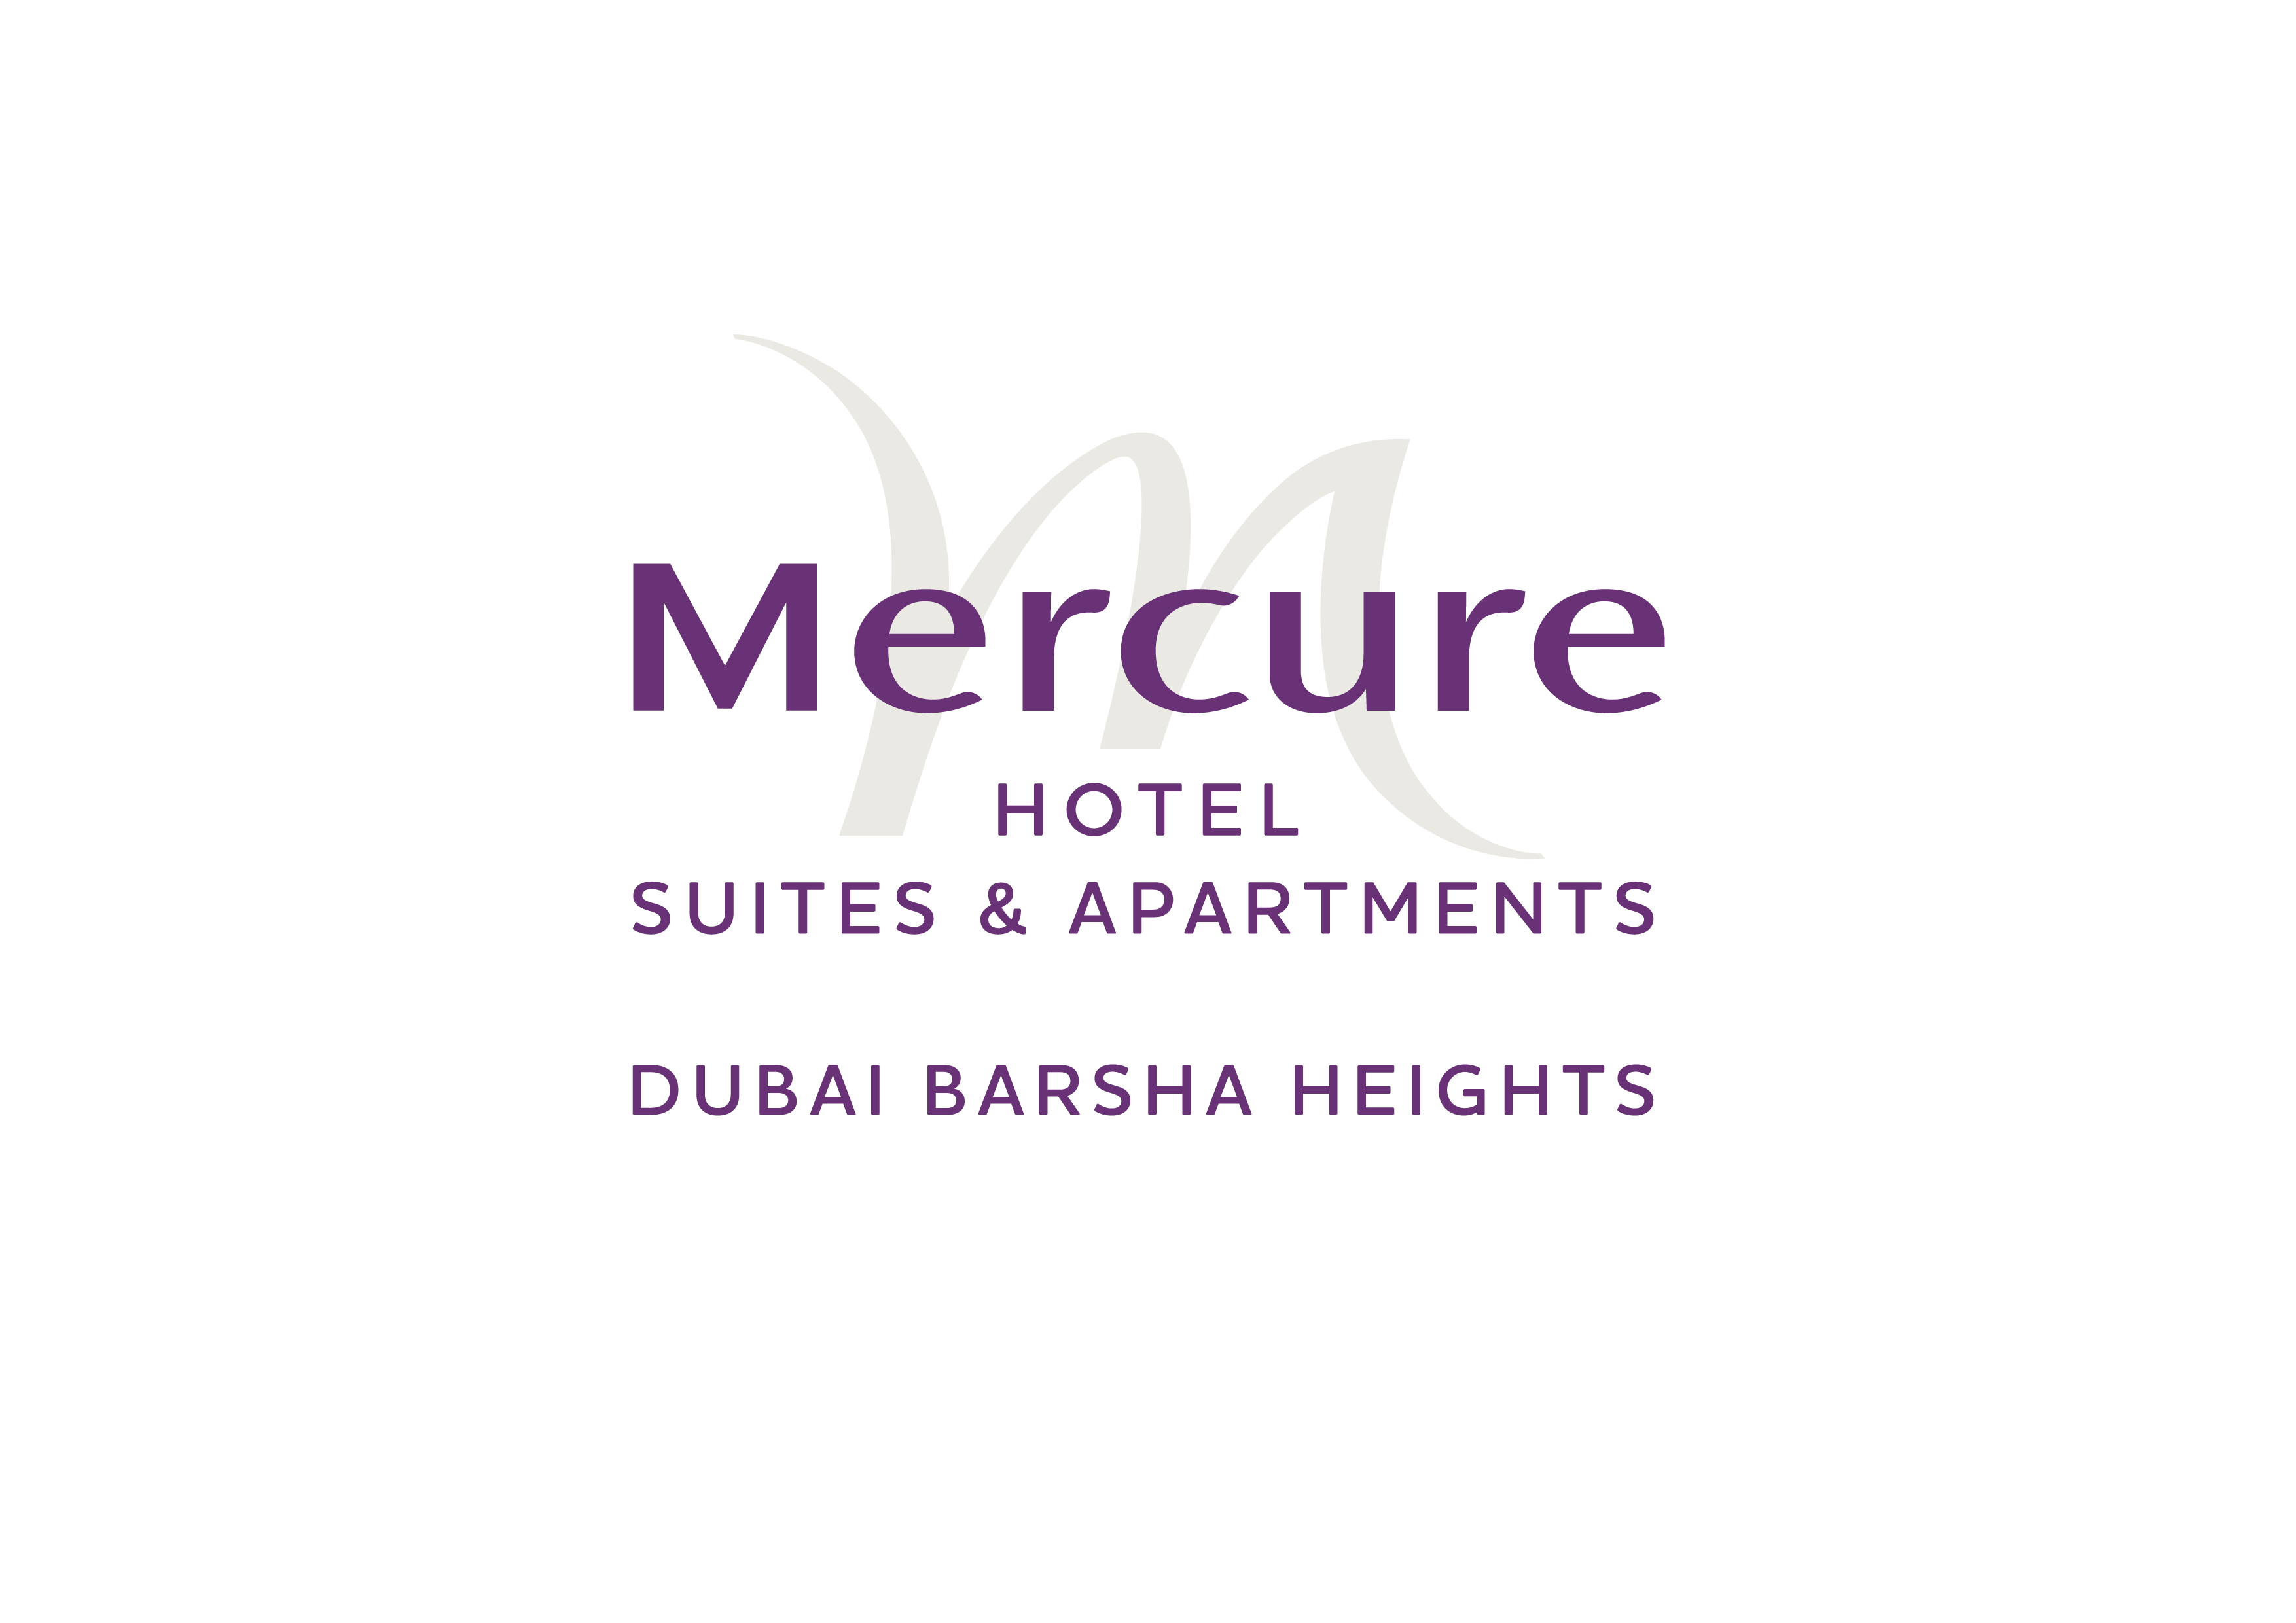 Mercure Dubai Barsha Heights Hiring Staff Latest Job Openings